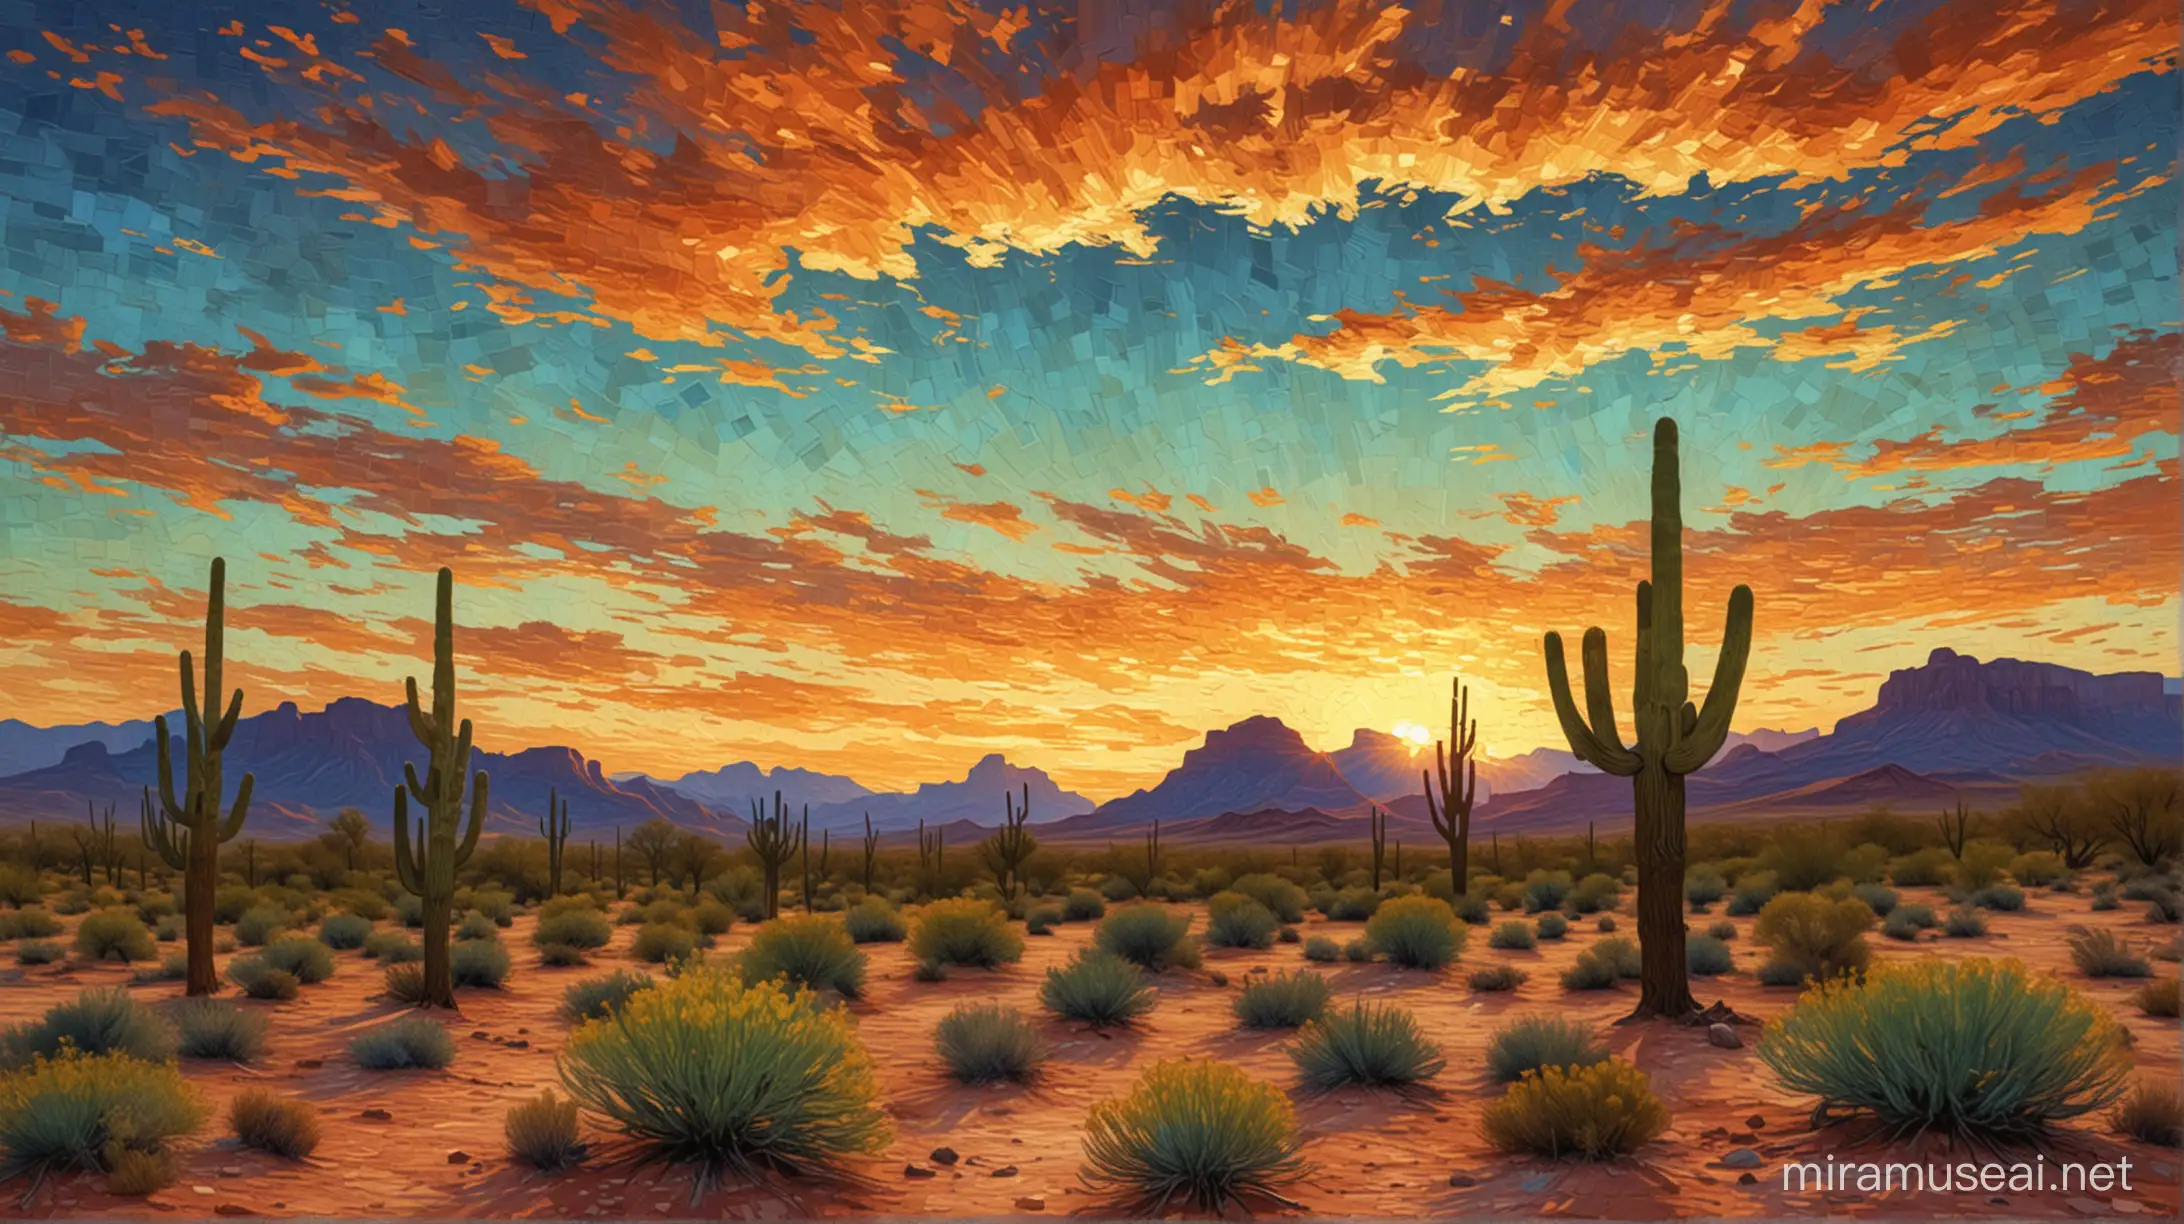 An Arizona desert sunrise in the style of Van Gogh.